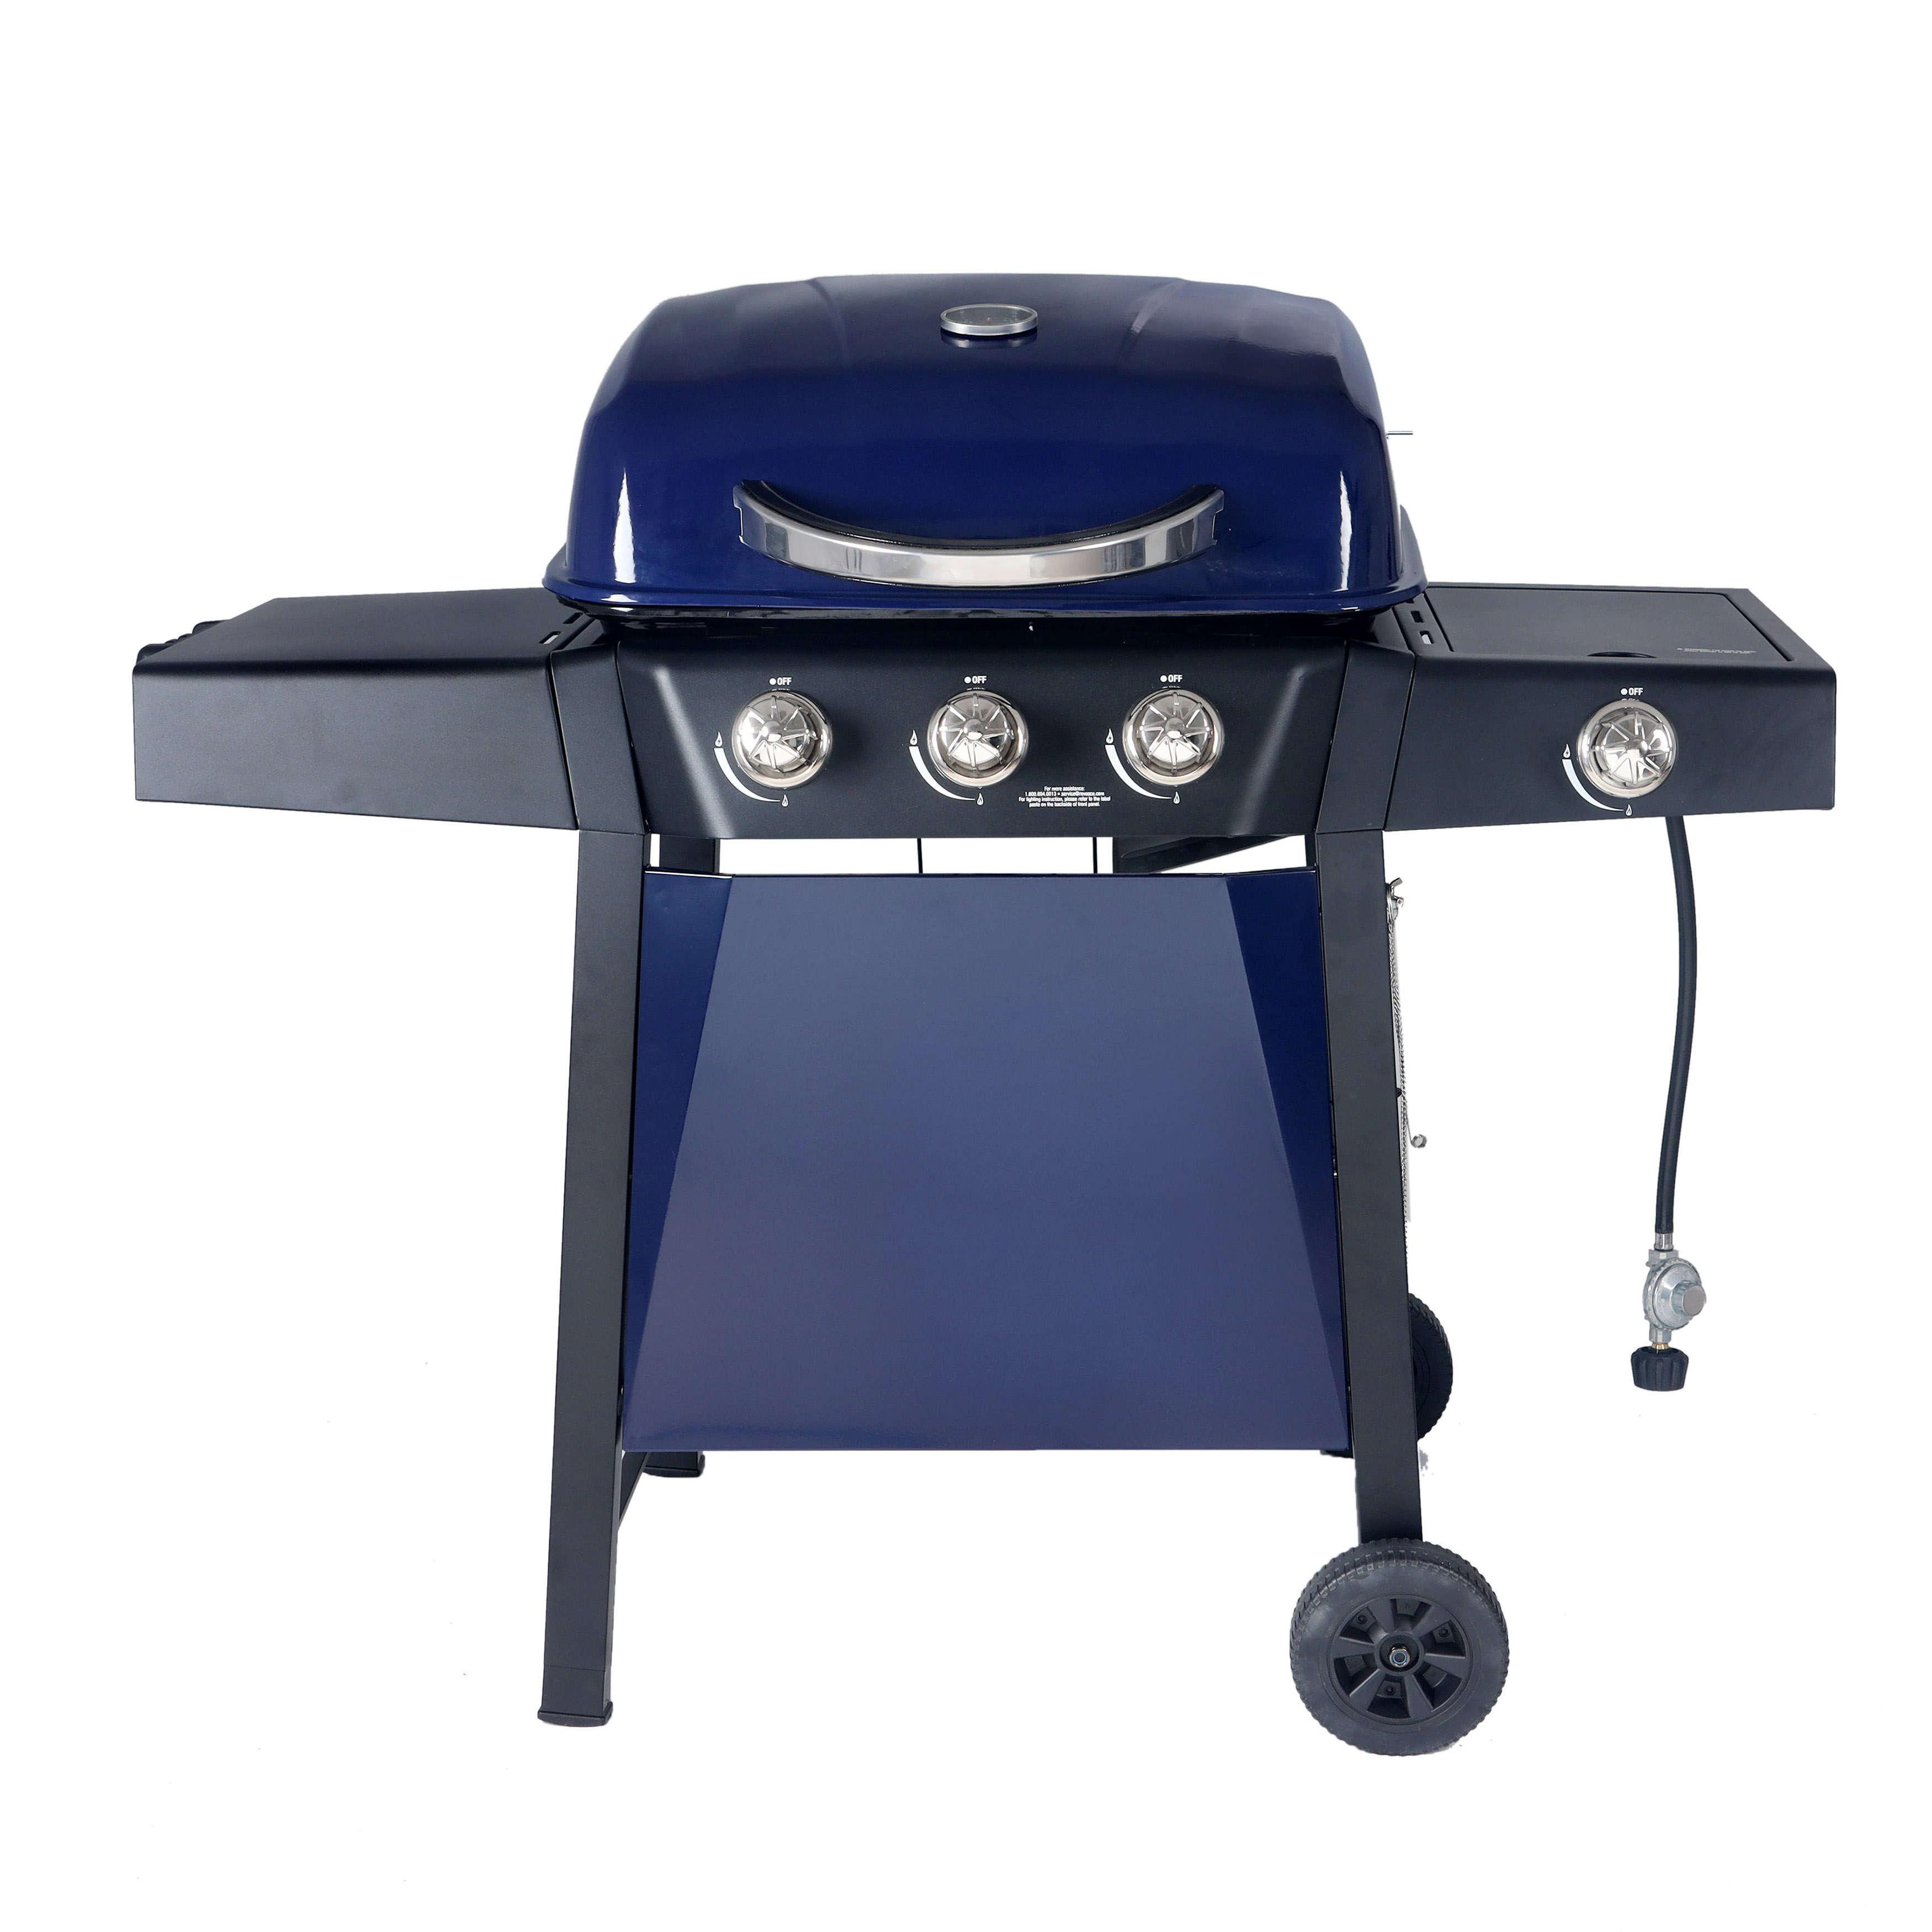 RevoAce 4 Burner Propane Gas Grill Including a Side Burner, Blue Sapphire, GBC1729WBS - image 1 of 18